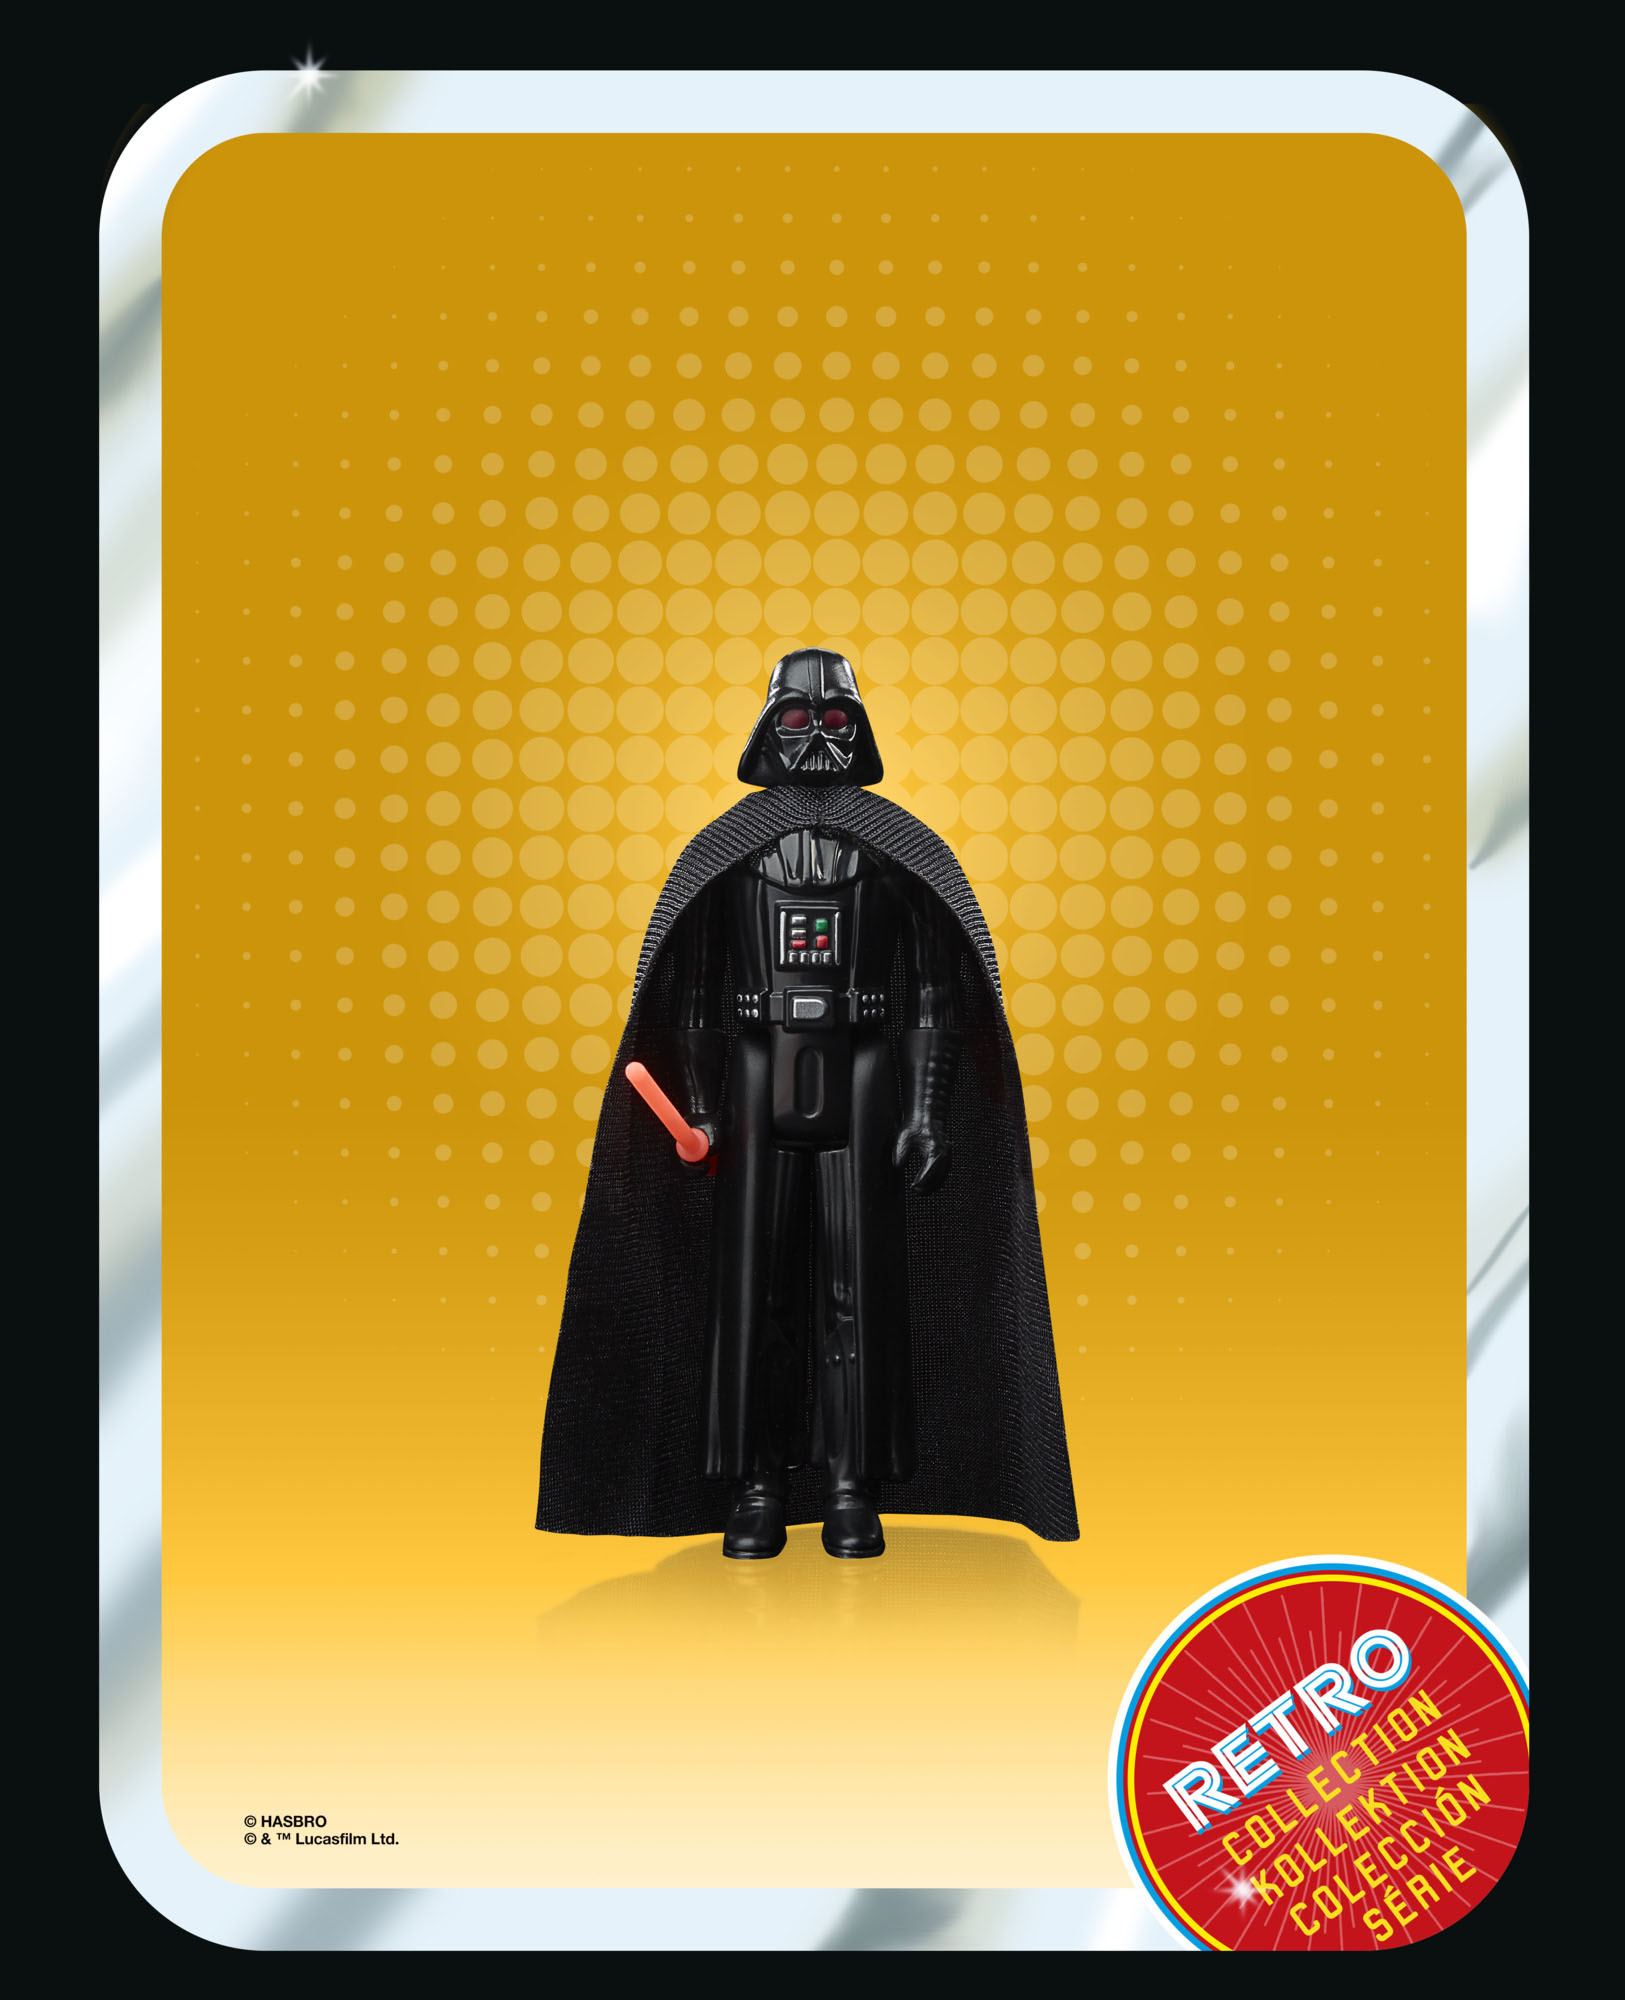 Star Wars: Obi-Wan Kenobi Retro Collection Actionfigur 2022 Darth Vader (The Dark Times) 10 cm F57715X00 5010994152345